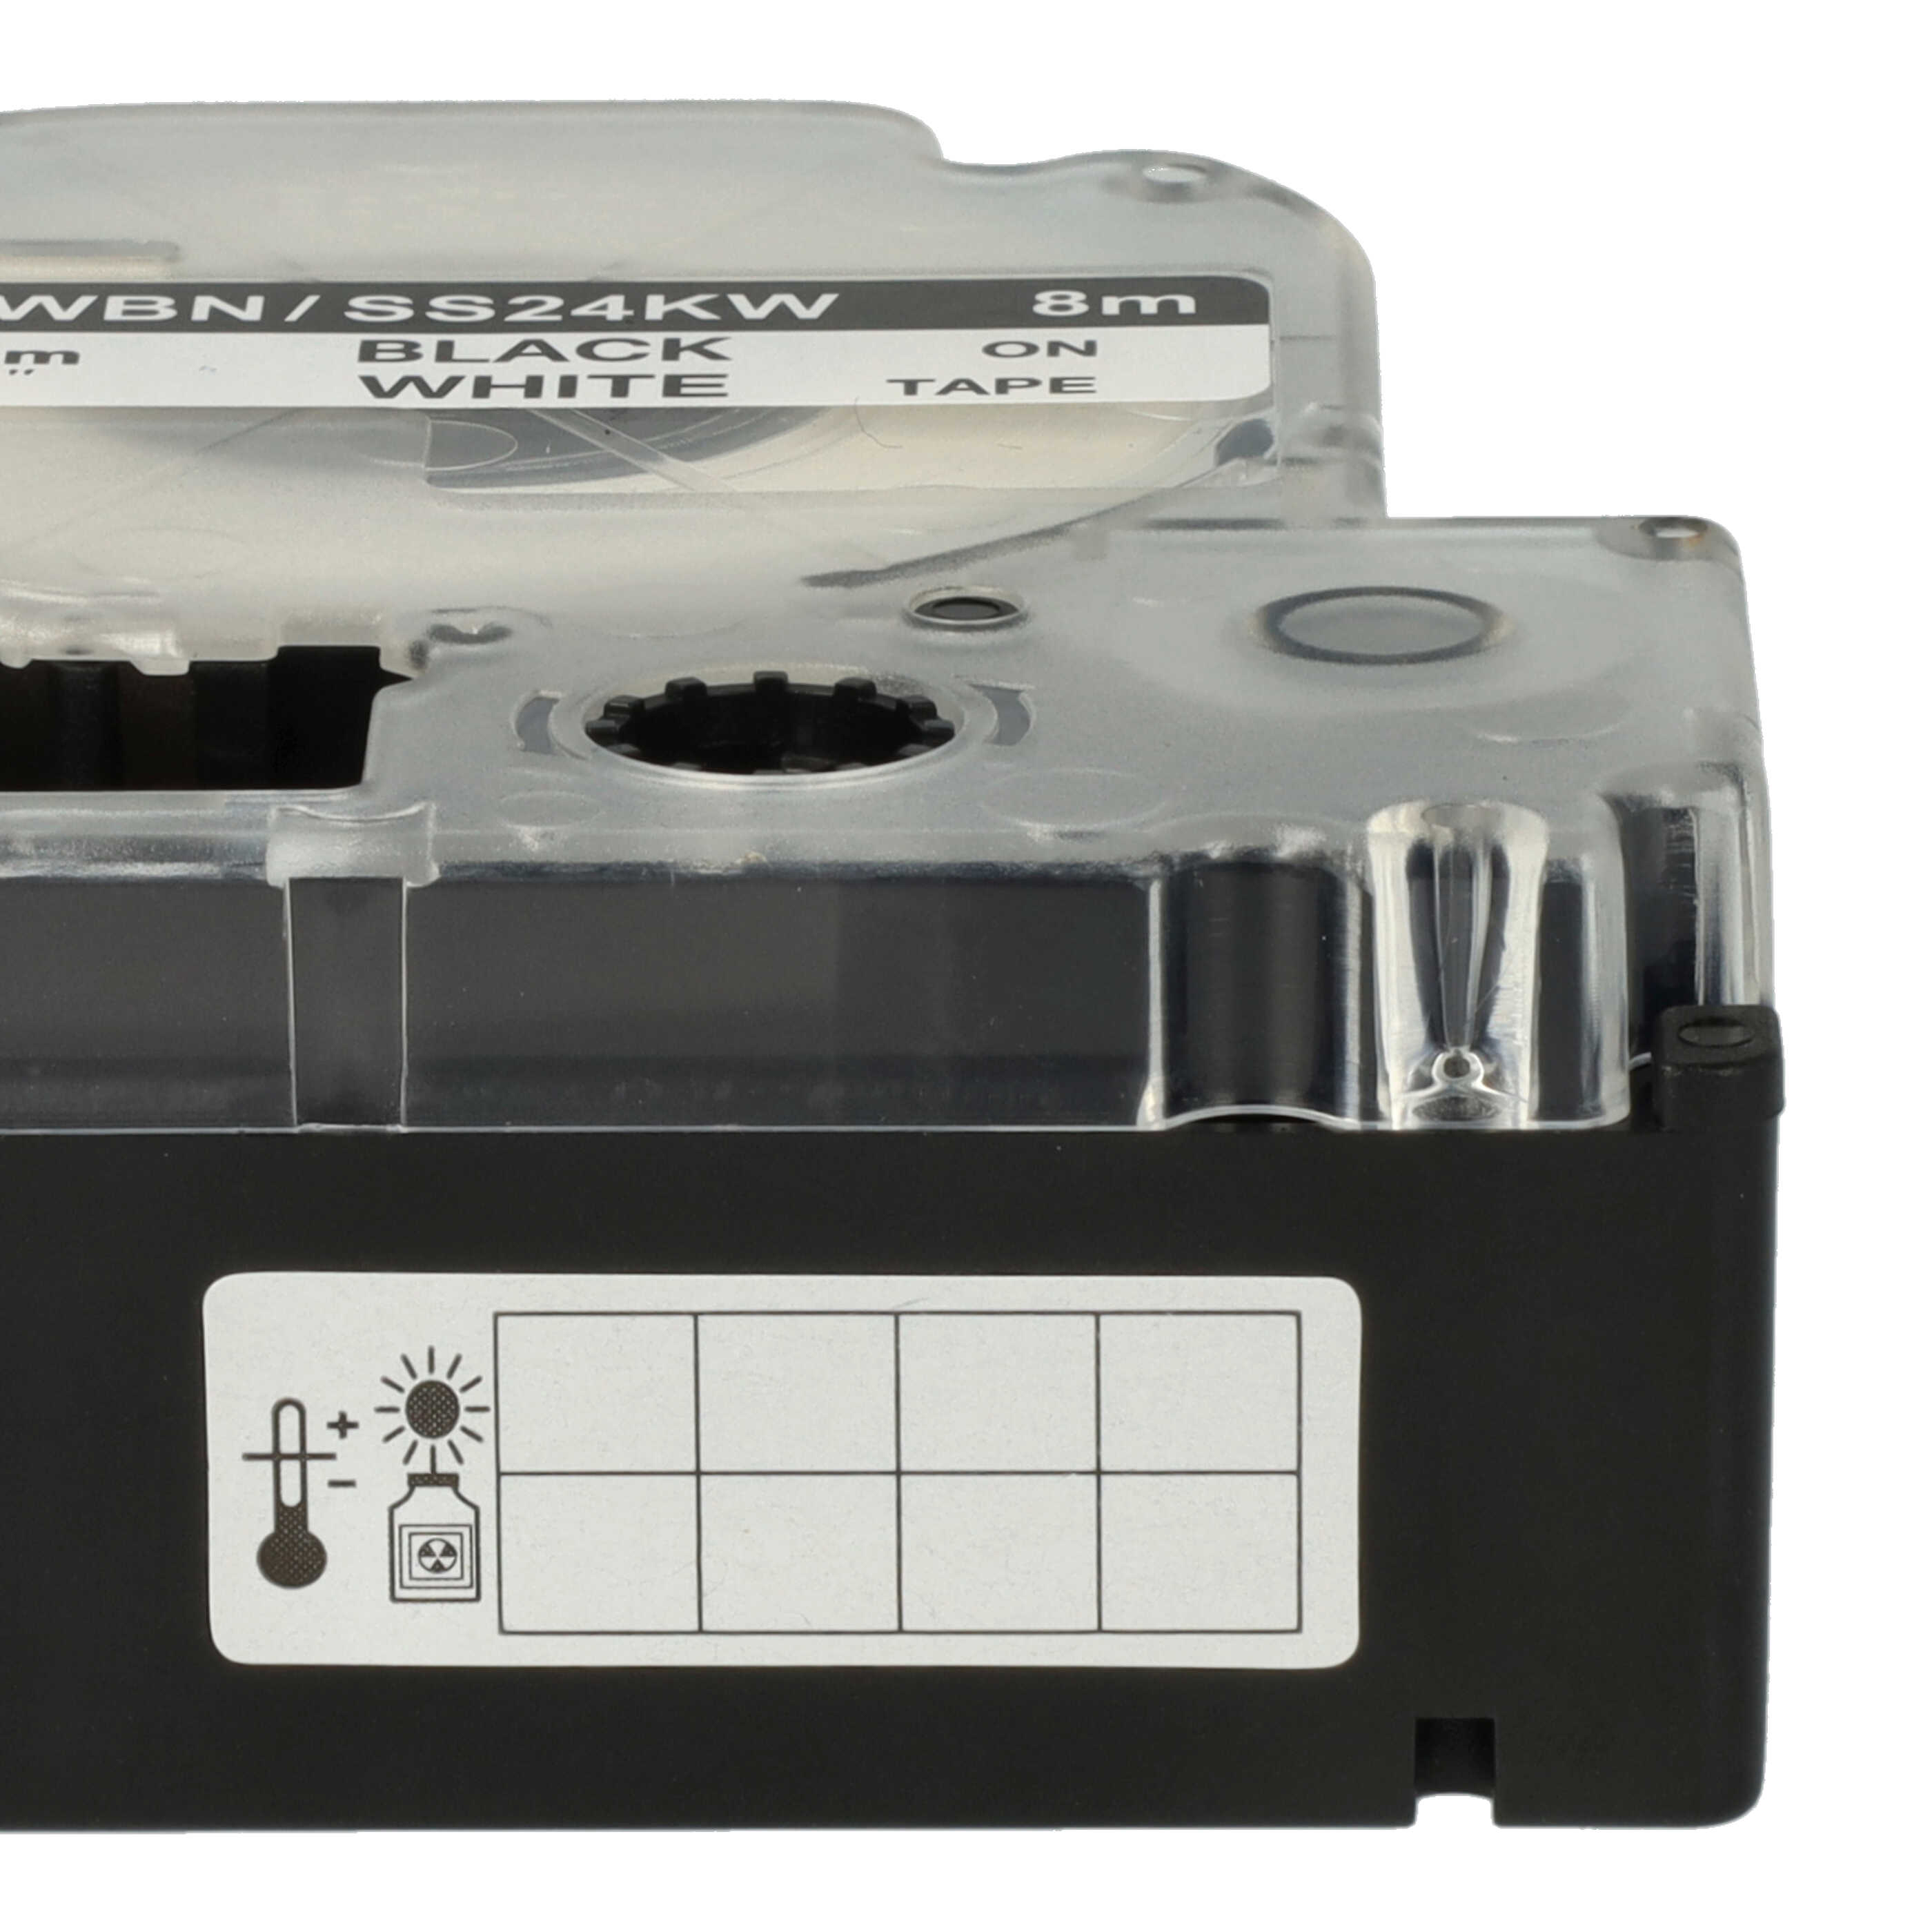 50x Casete cinta escritura reemplaza Epson LC-6WBN Negro su Blanco